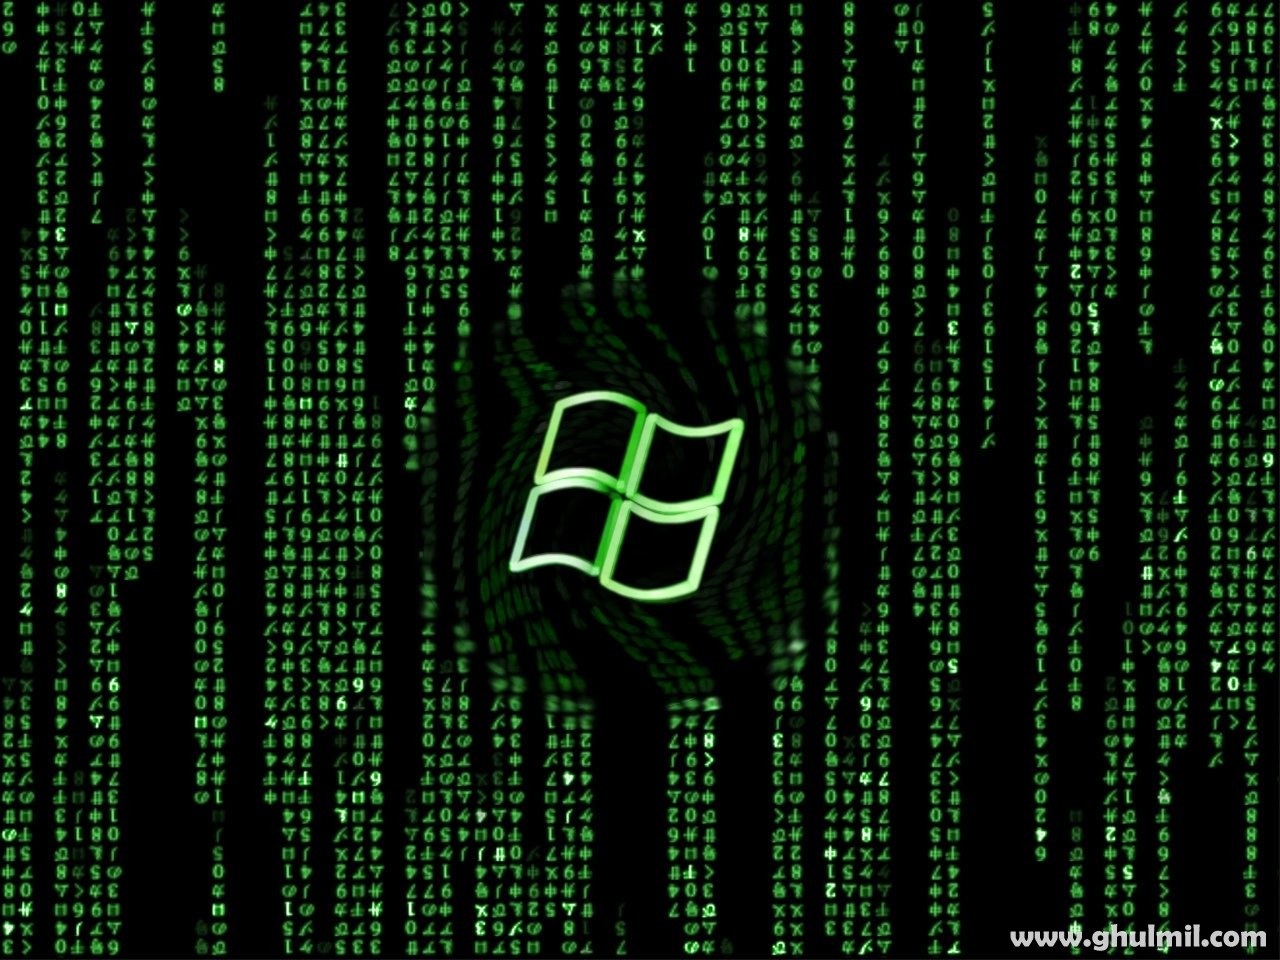 Animated Matrix Wallpaper Windows 10 - WallpaperSafari